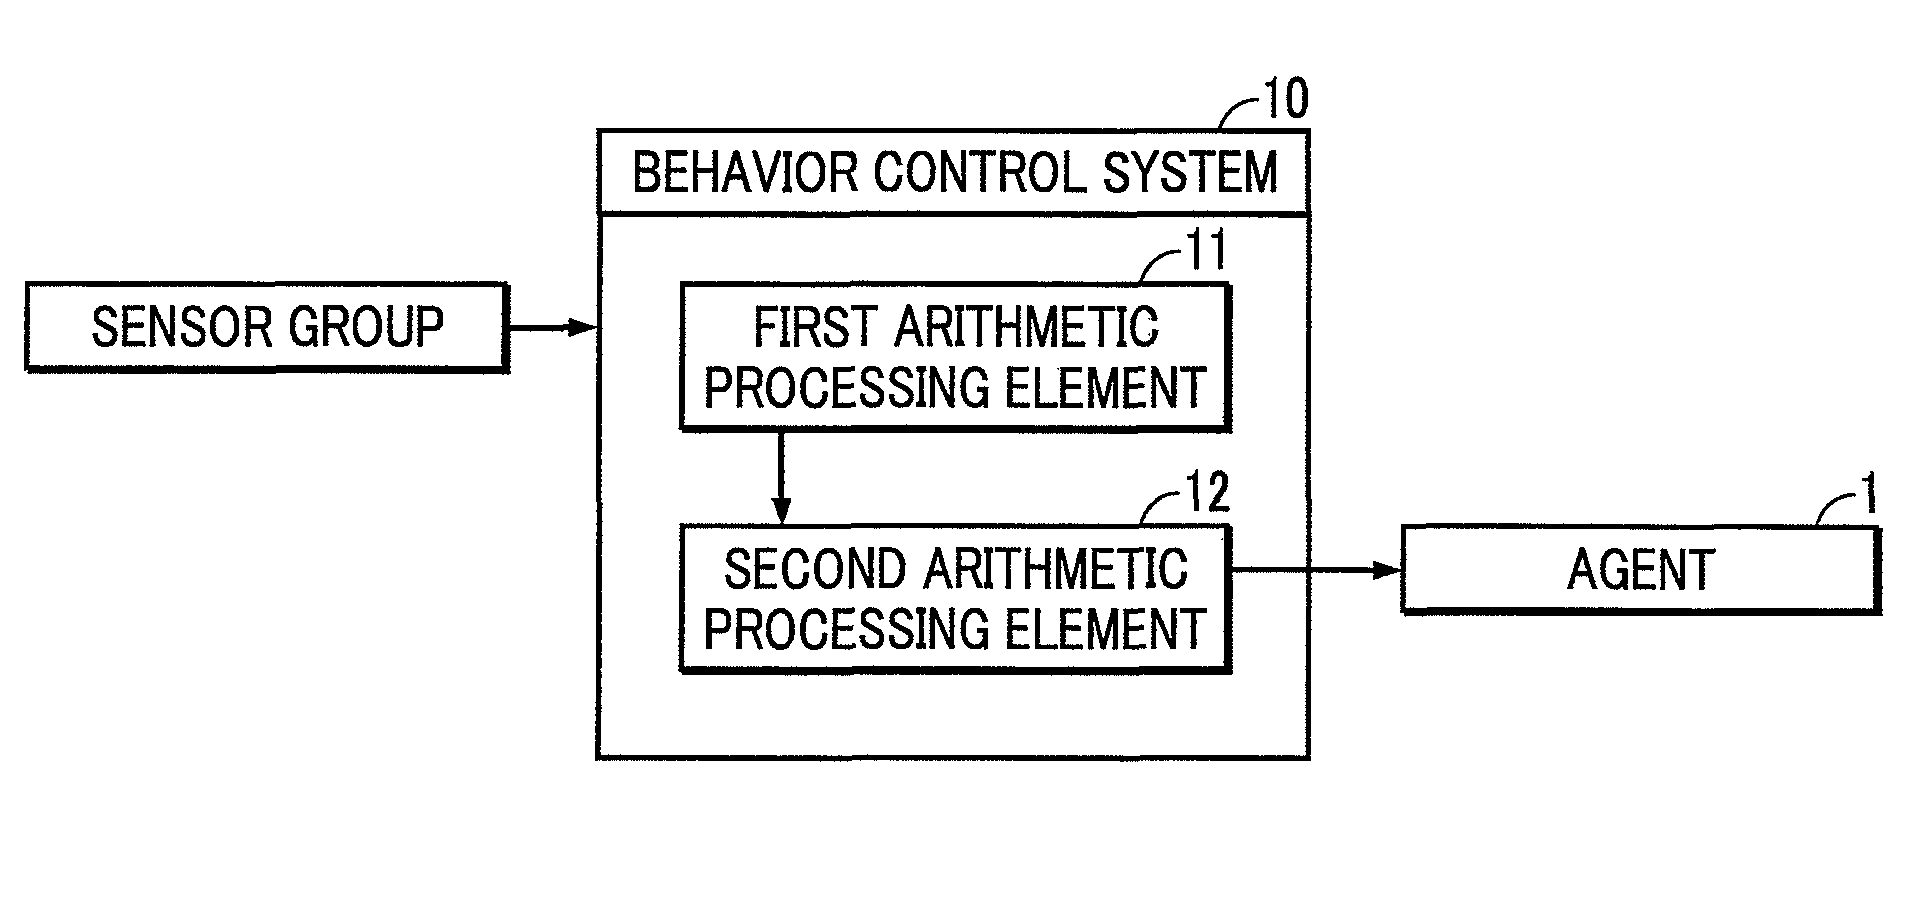 Behavior control system